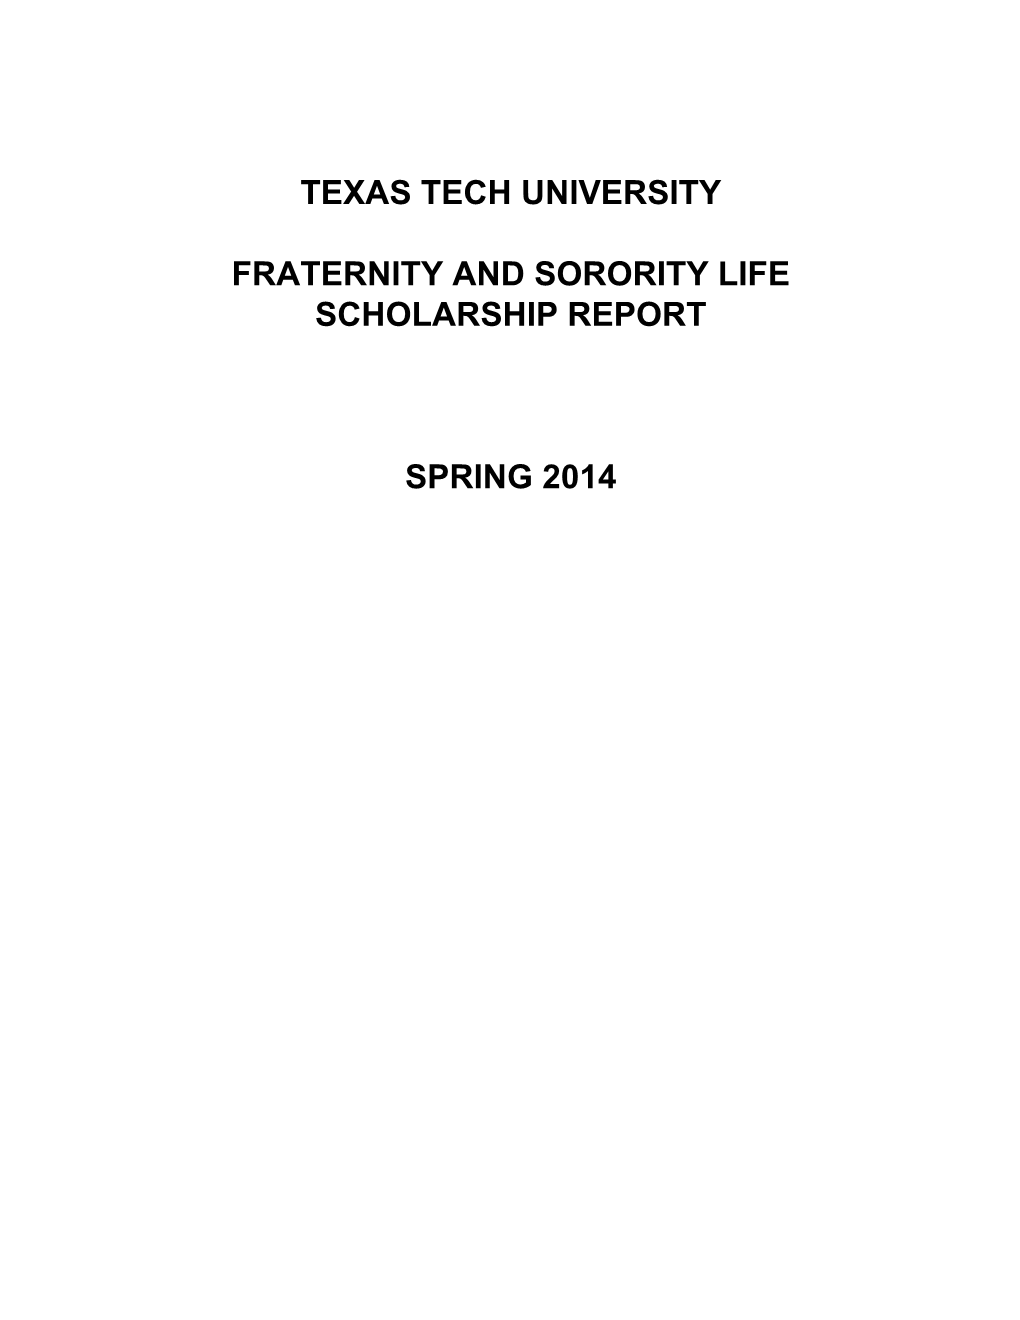 Texas Tech University Fraternity and Sorority